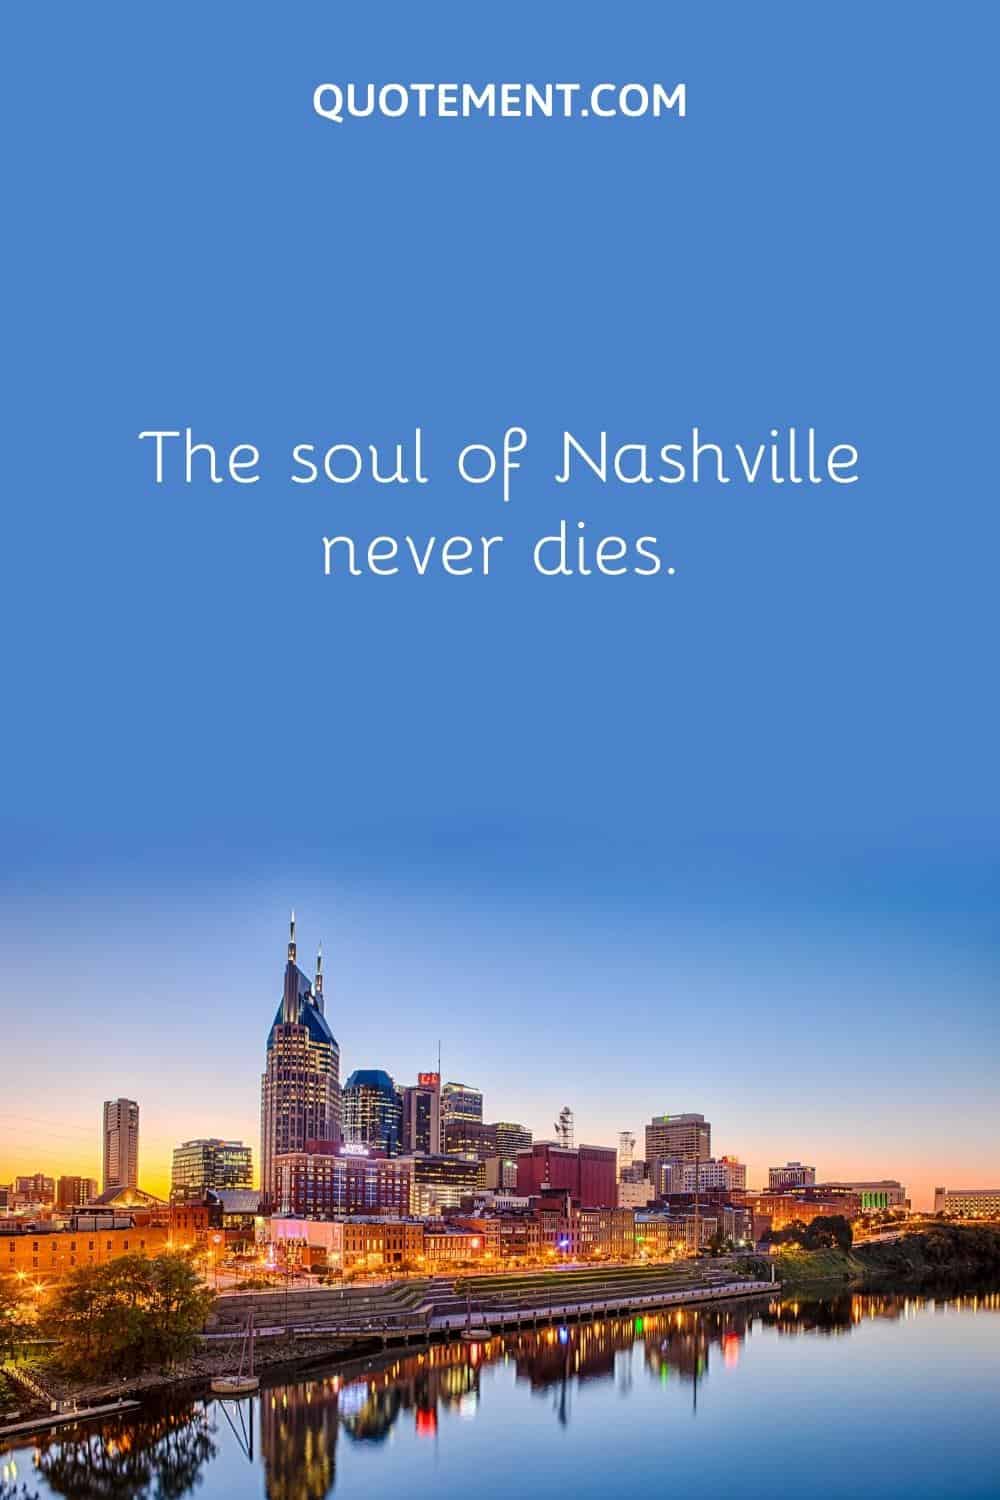 The soul of Nashville never dies.